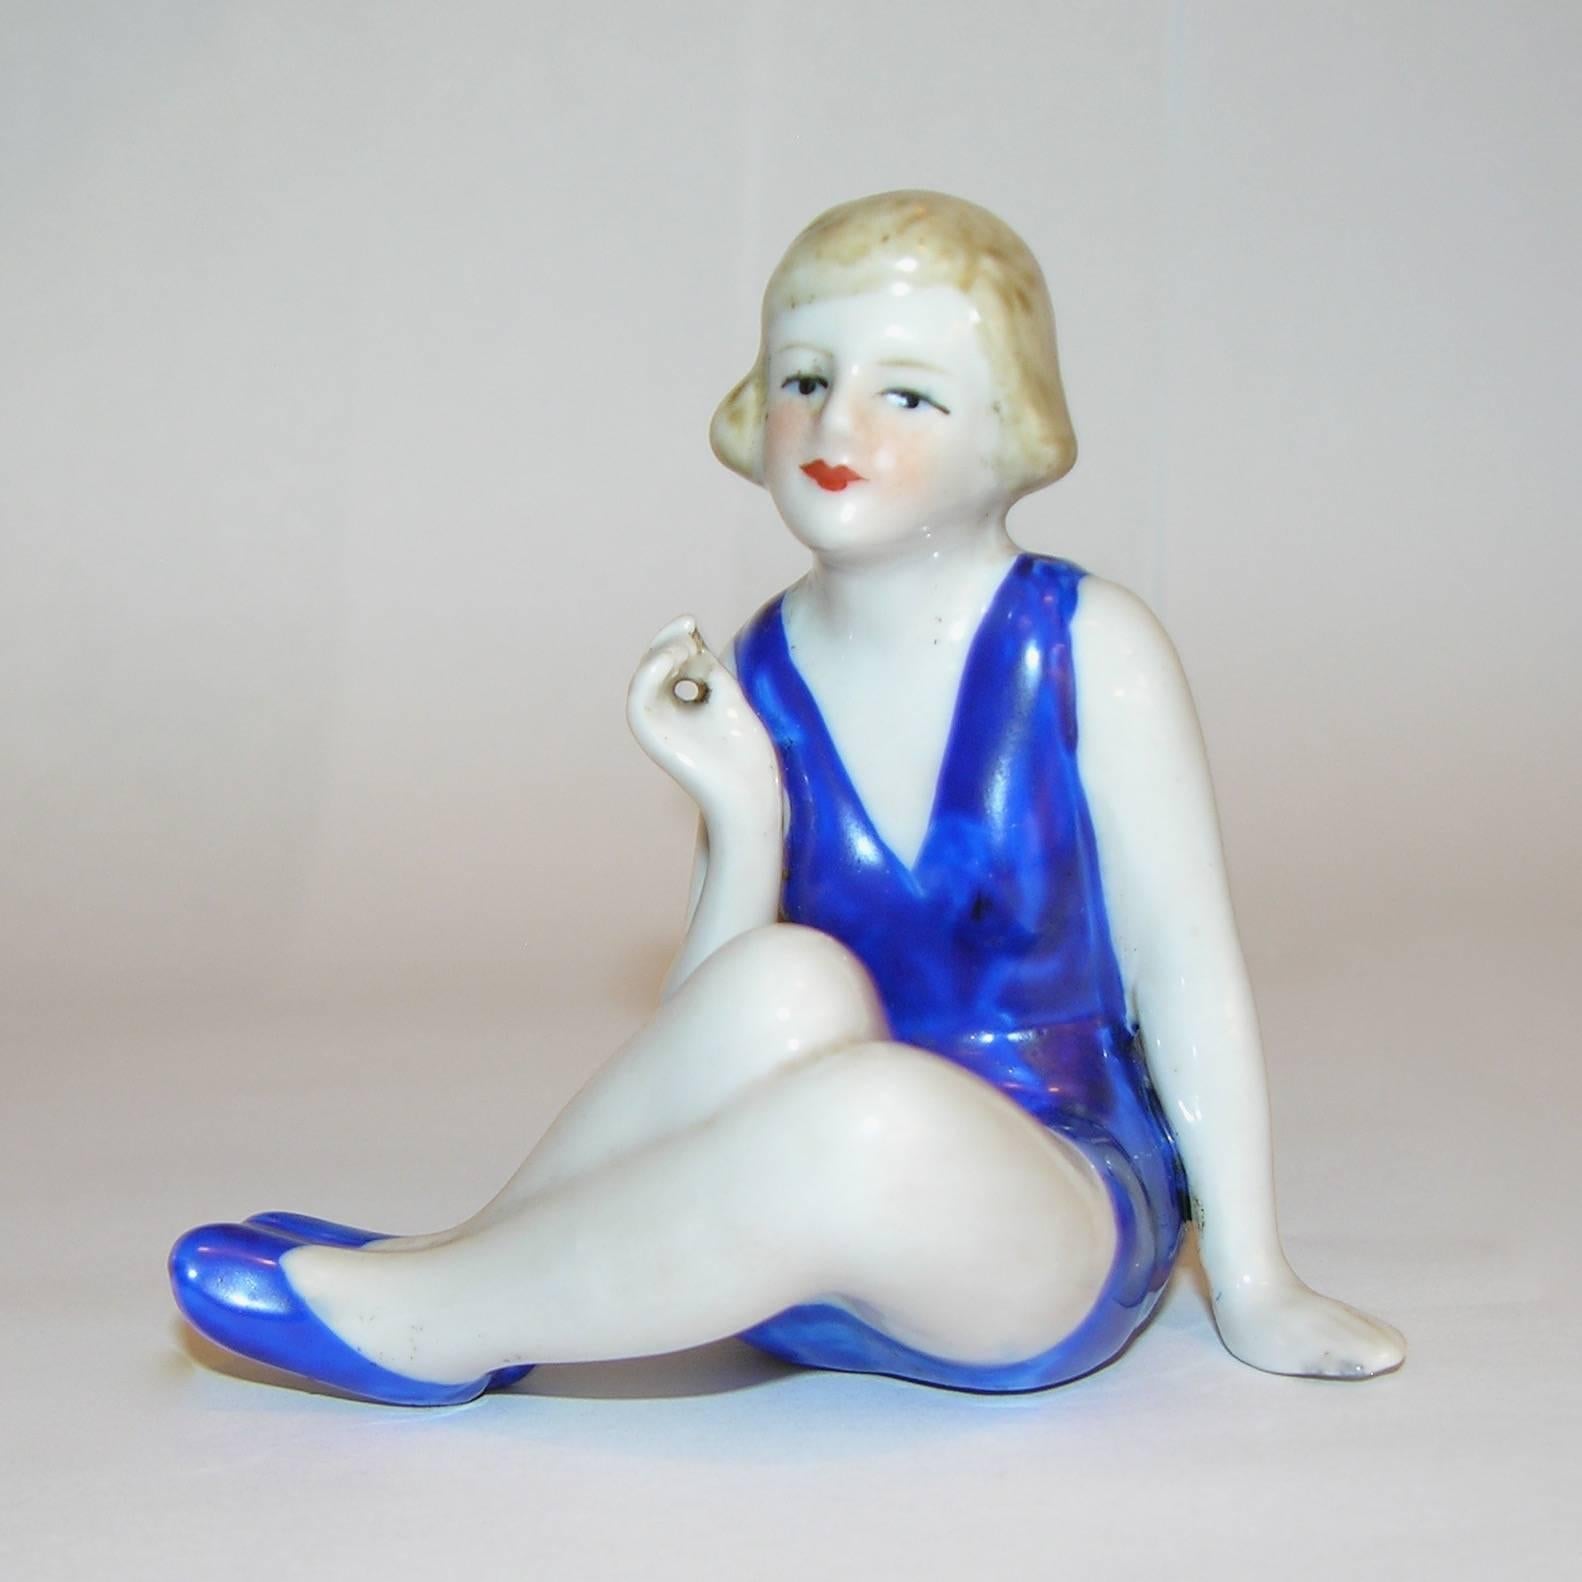 Hand-Painted Italian 1930 Art Deco Ceramic Female Figurines in Colored Stripes Bathing Suit